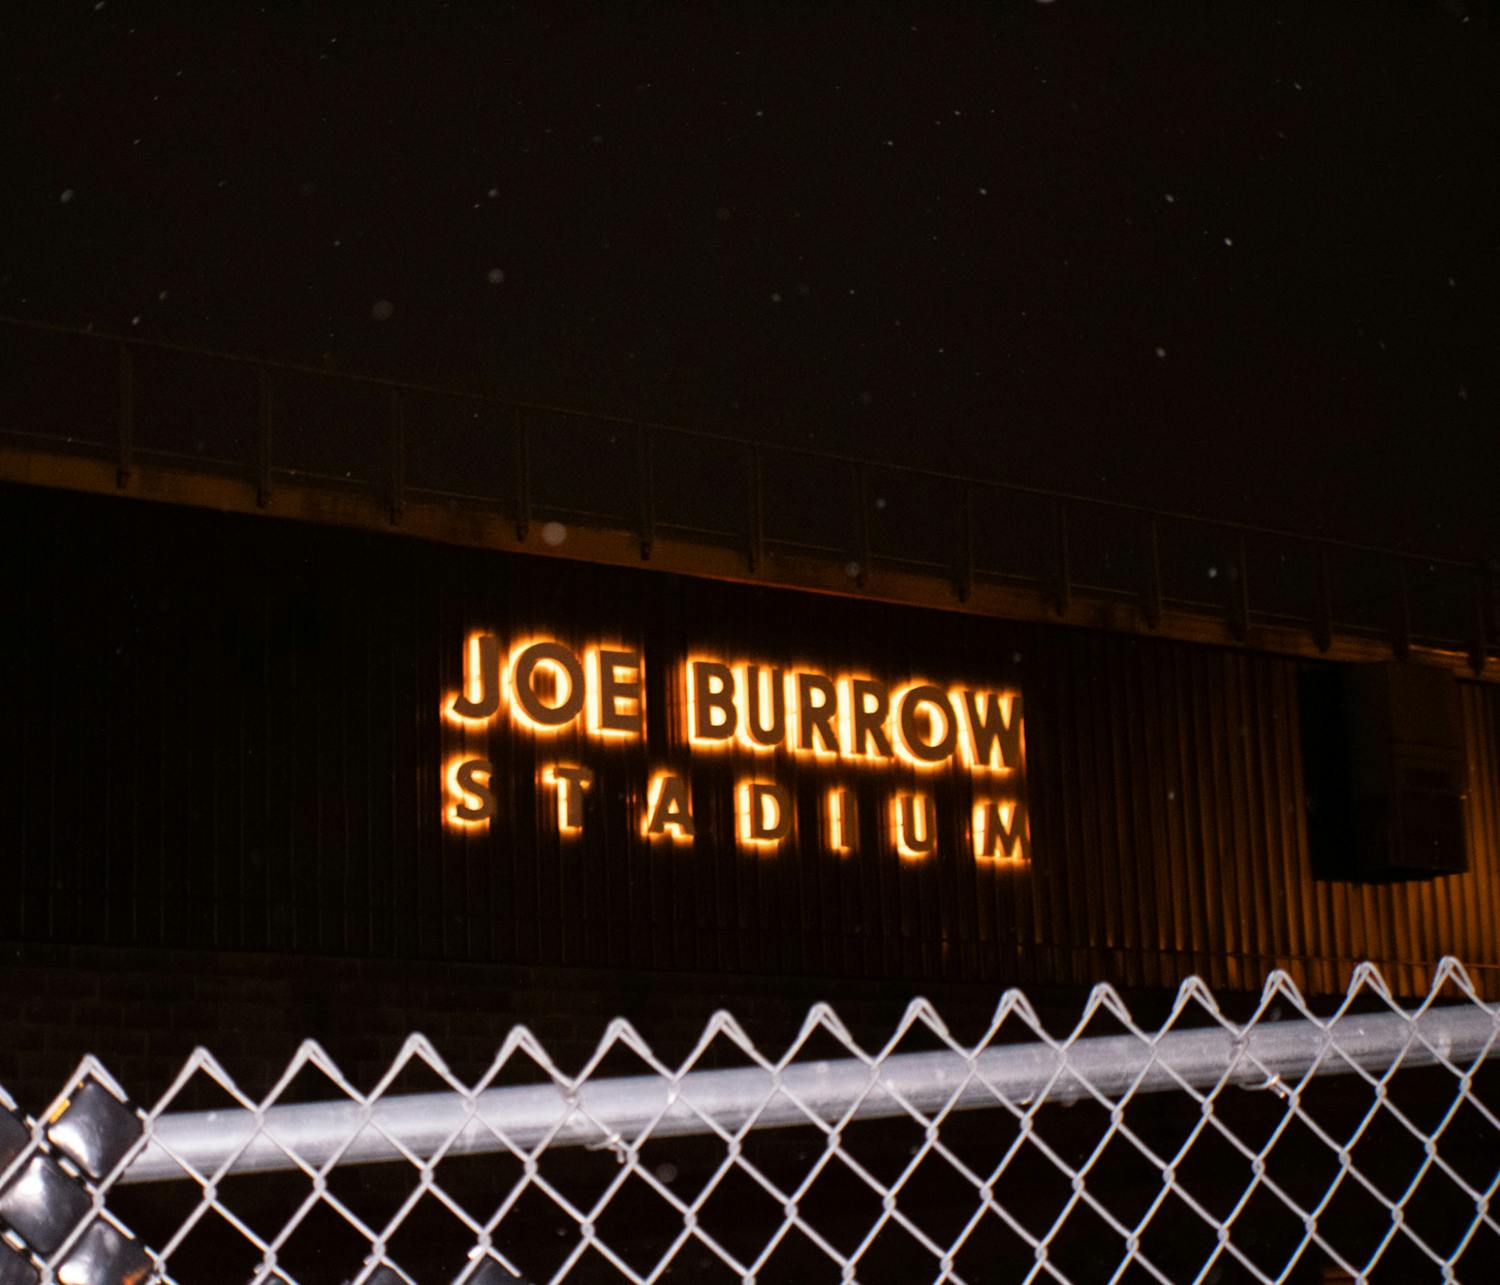 Burrow Stadium